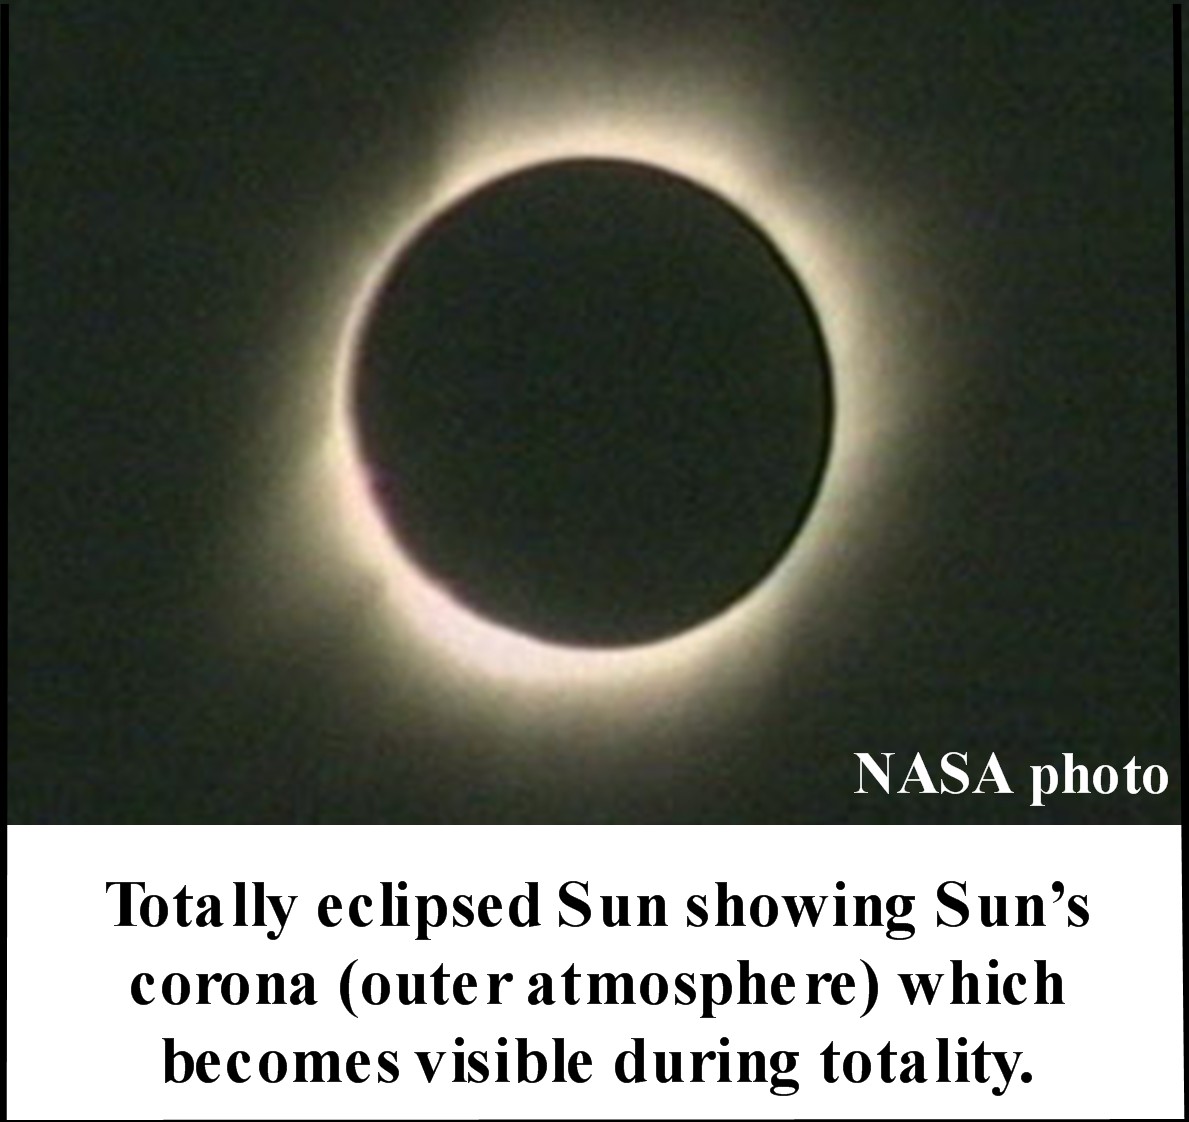 Eclipsed Sun showing corona - NASA